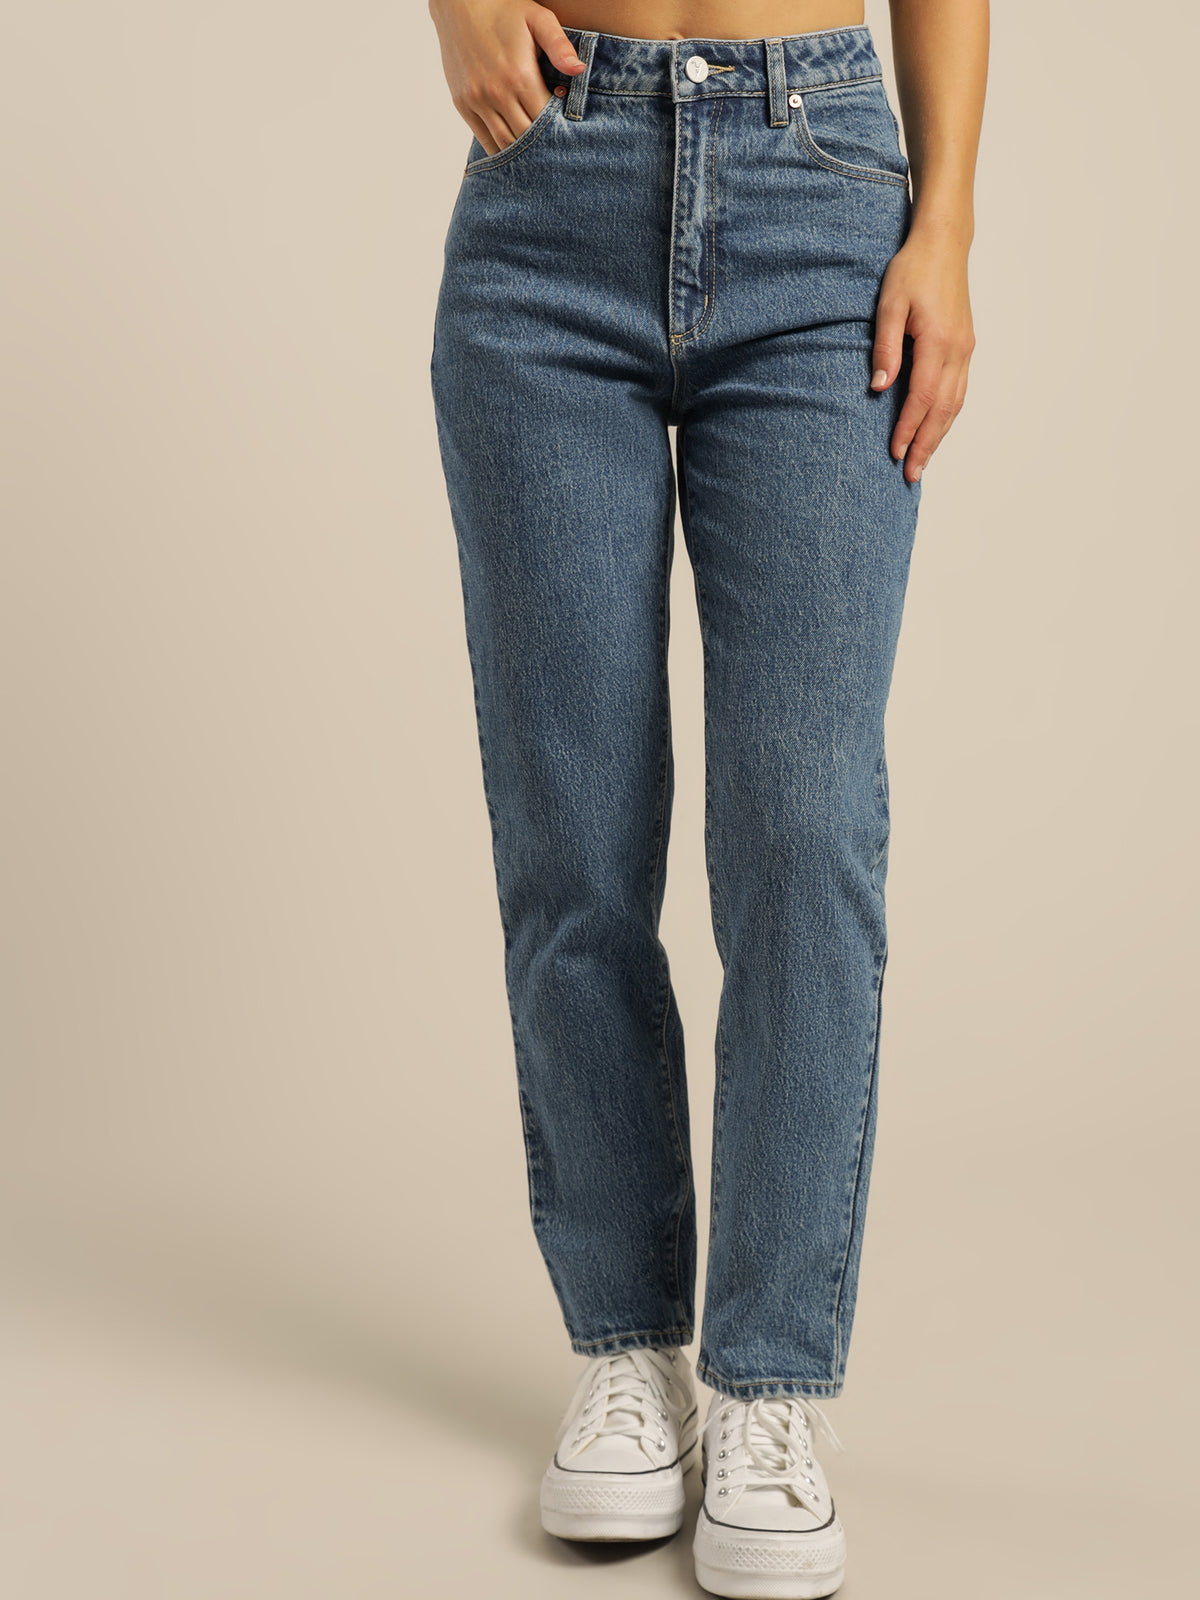 A 94 High Slim Jean in Chantell Organic